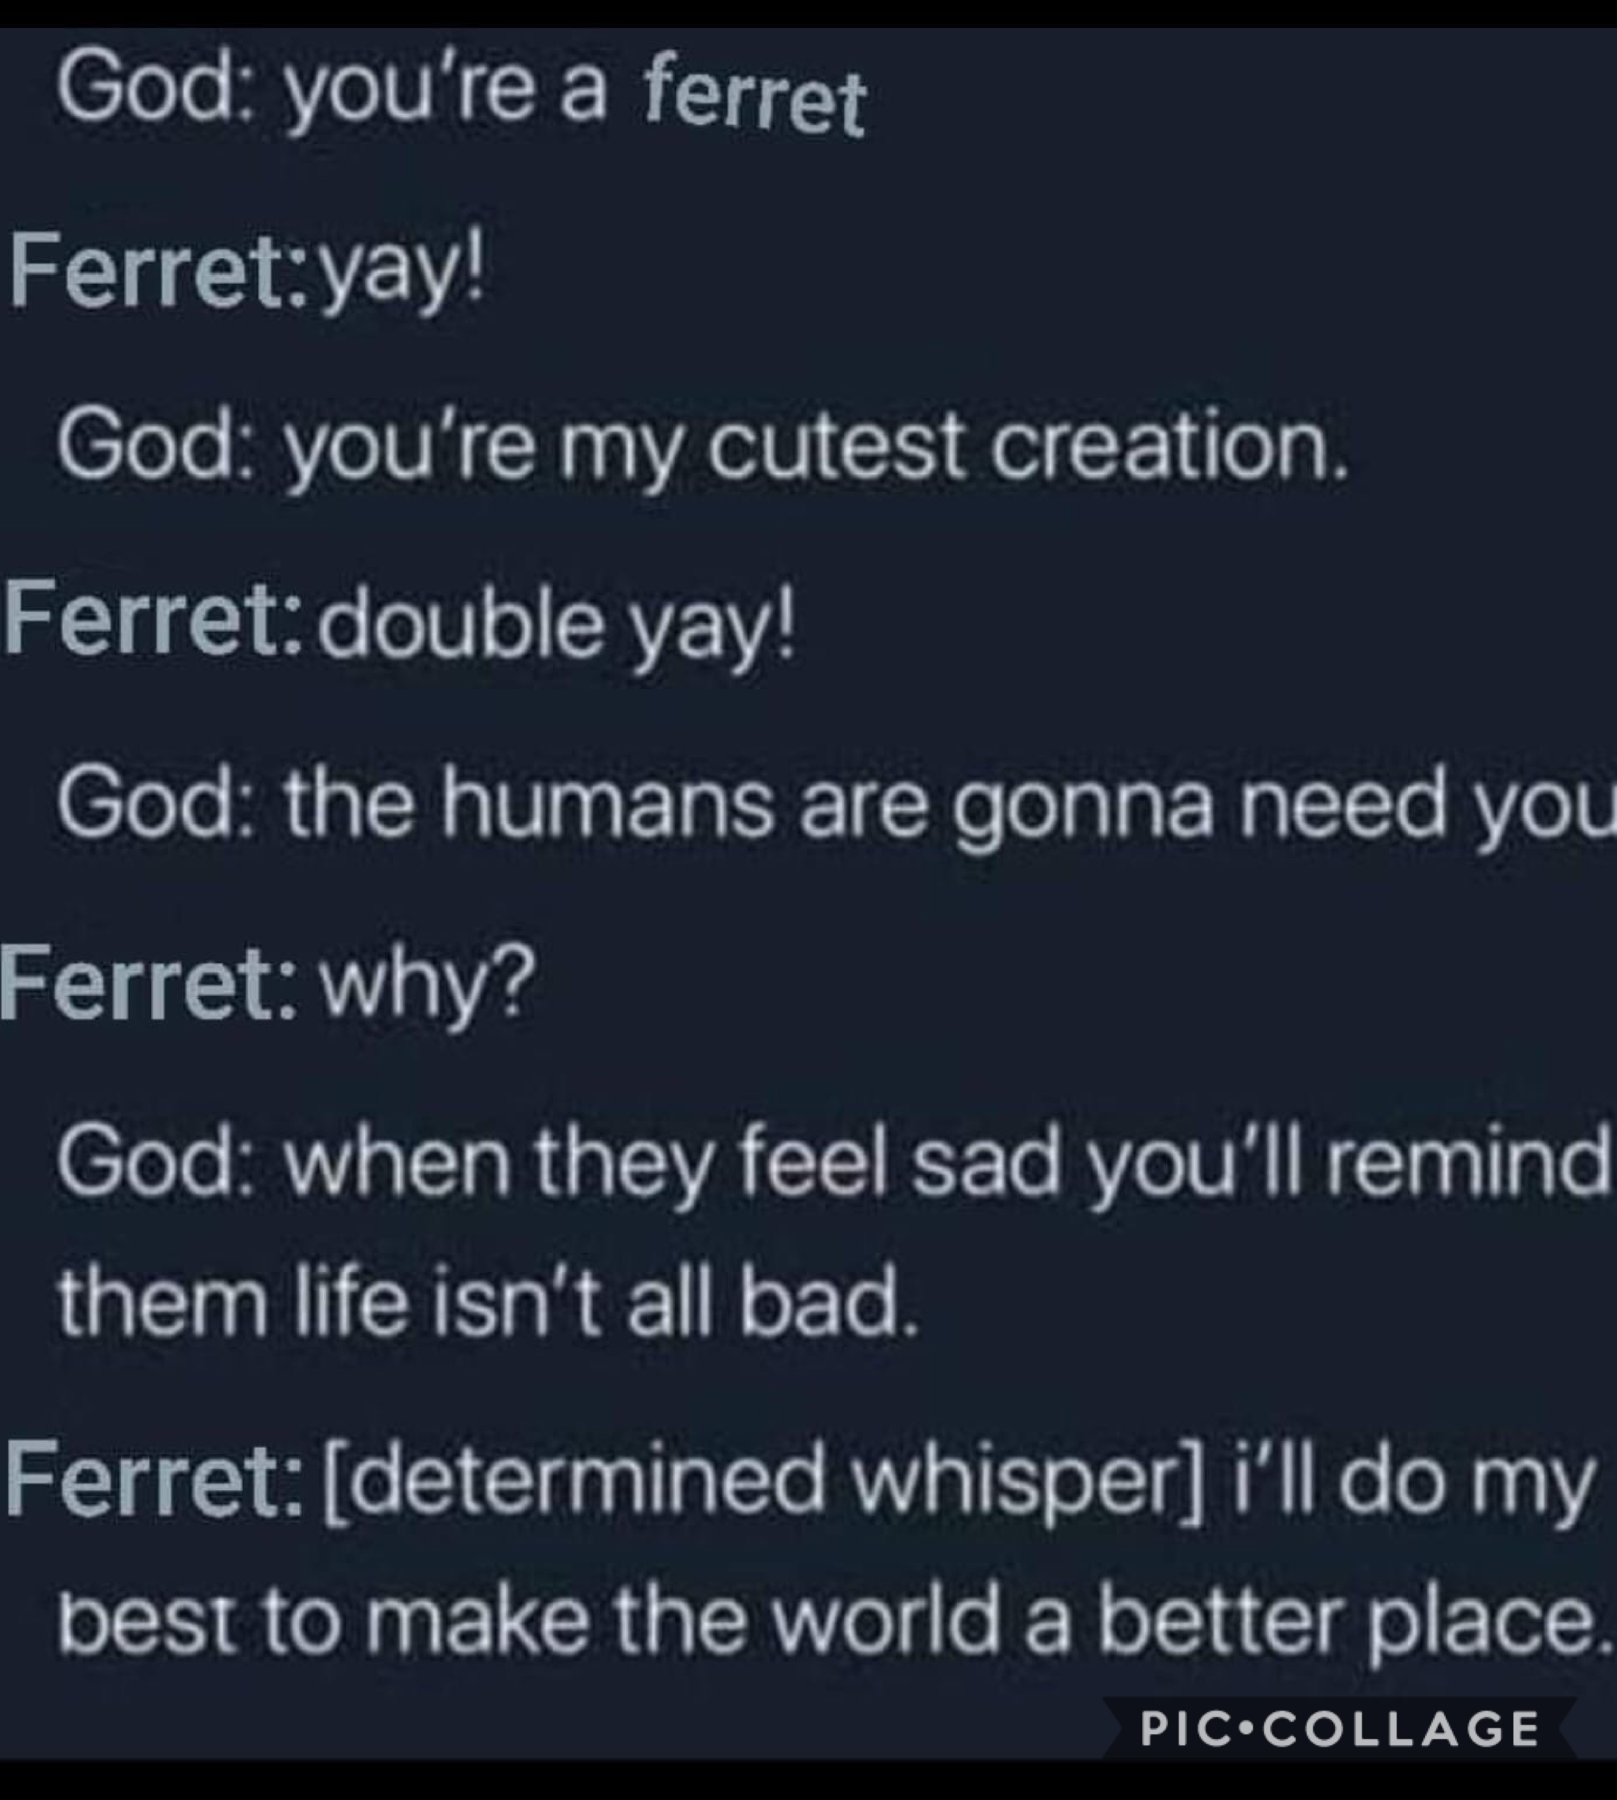 I love my ferret